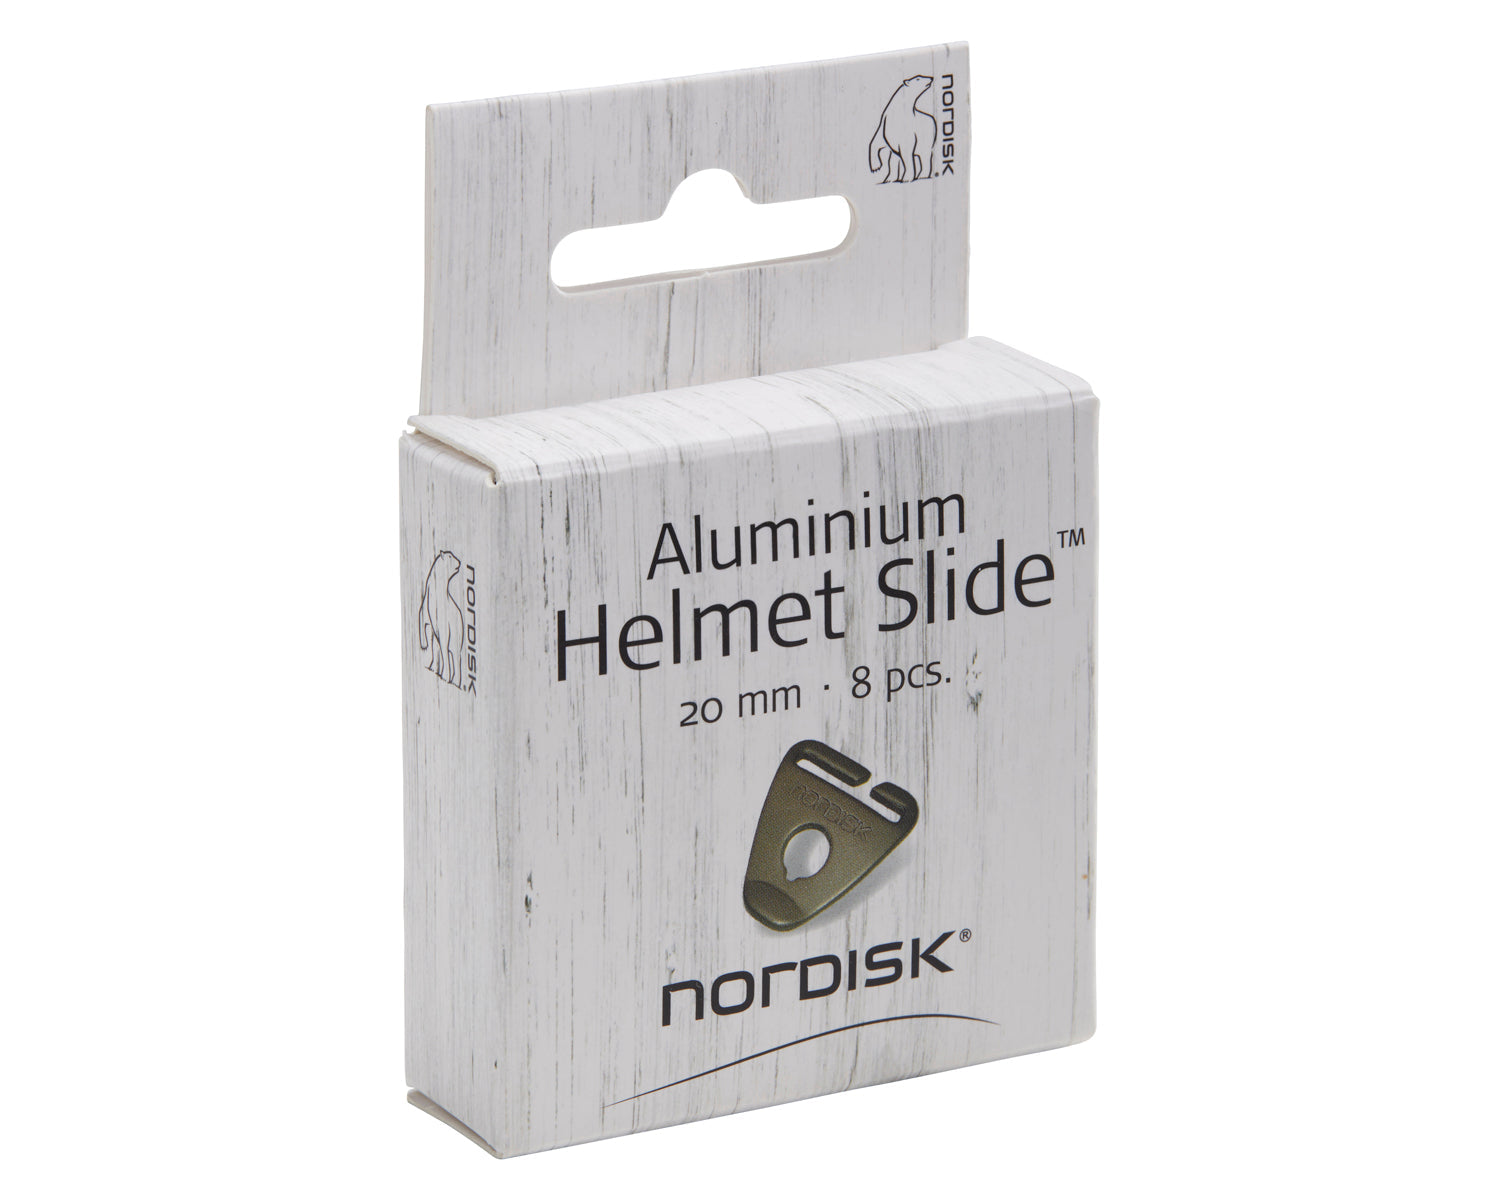 Aluminium Helmet Slide 20mm - Mud brown